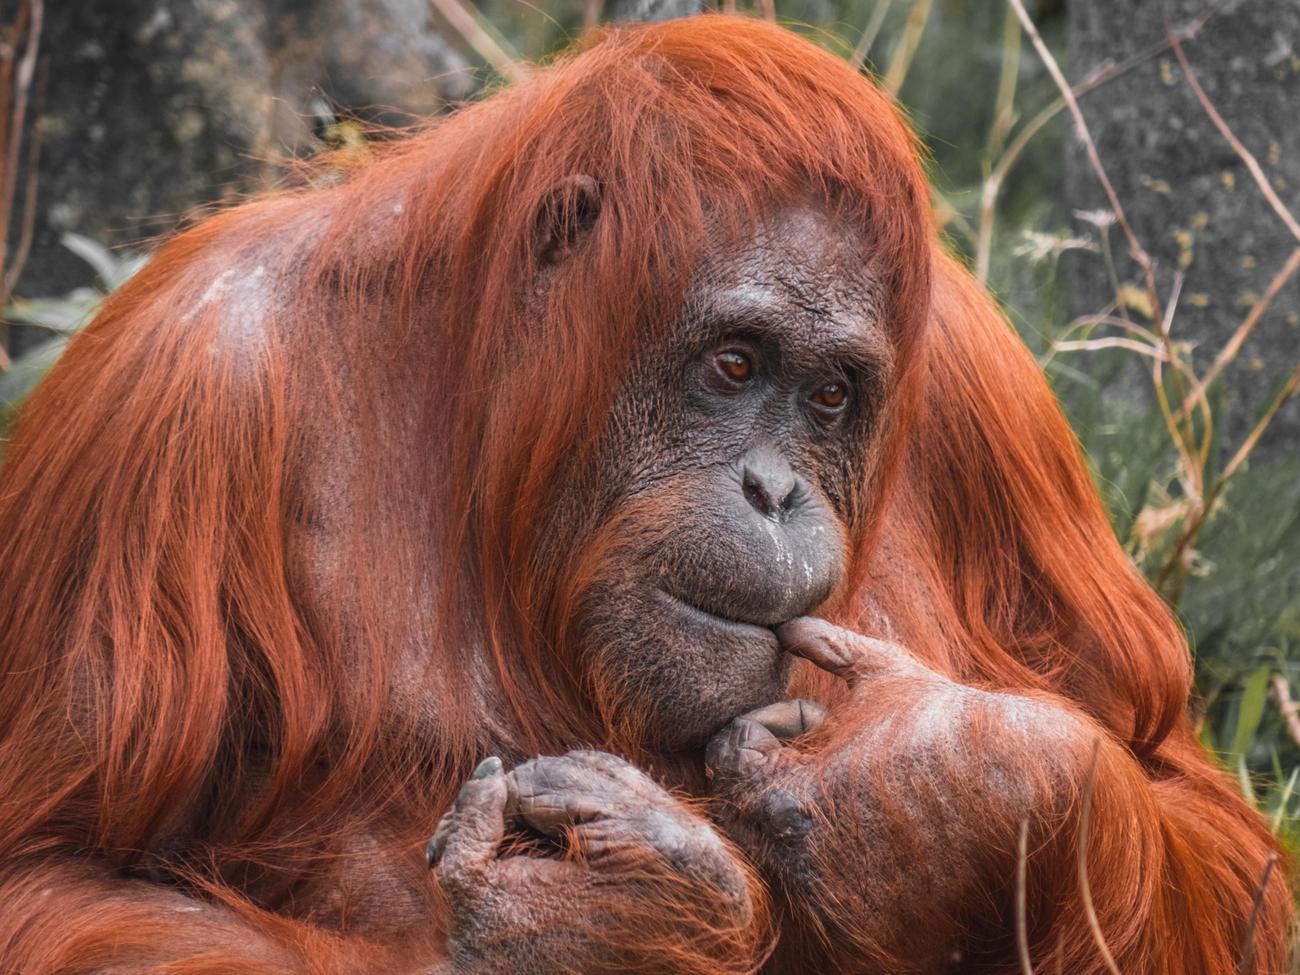 Causes of orangutan endangerment featured